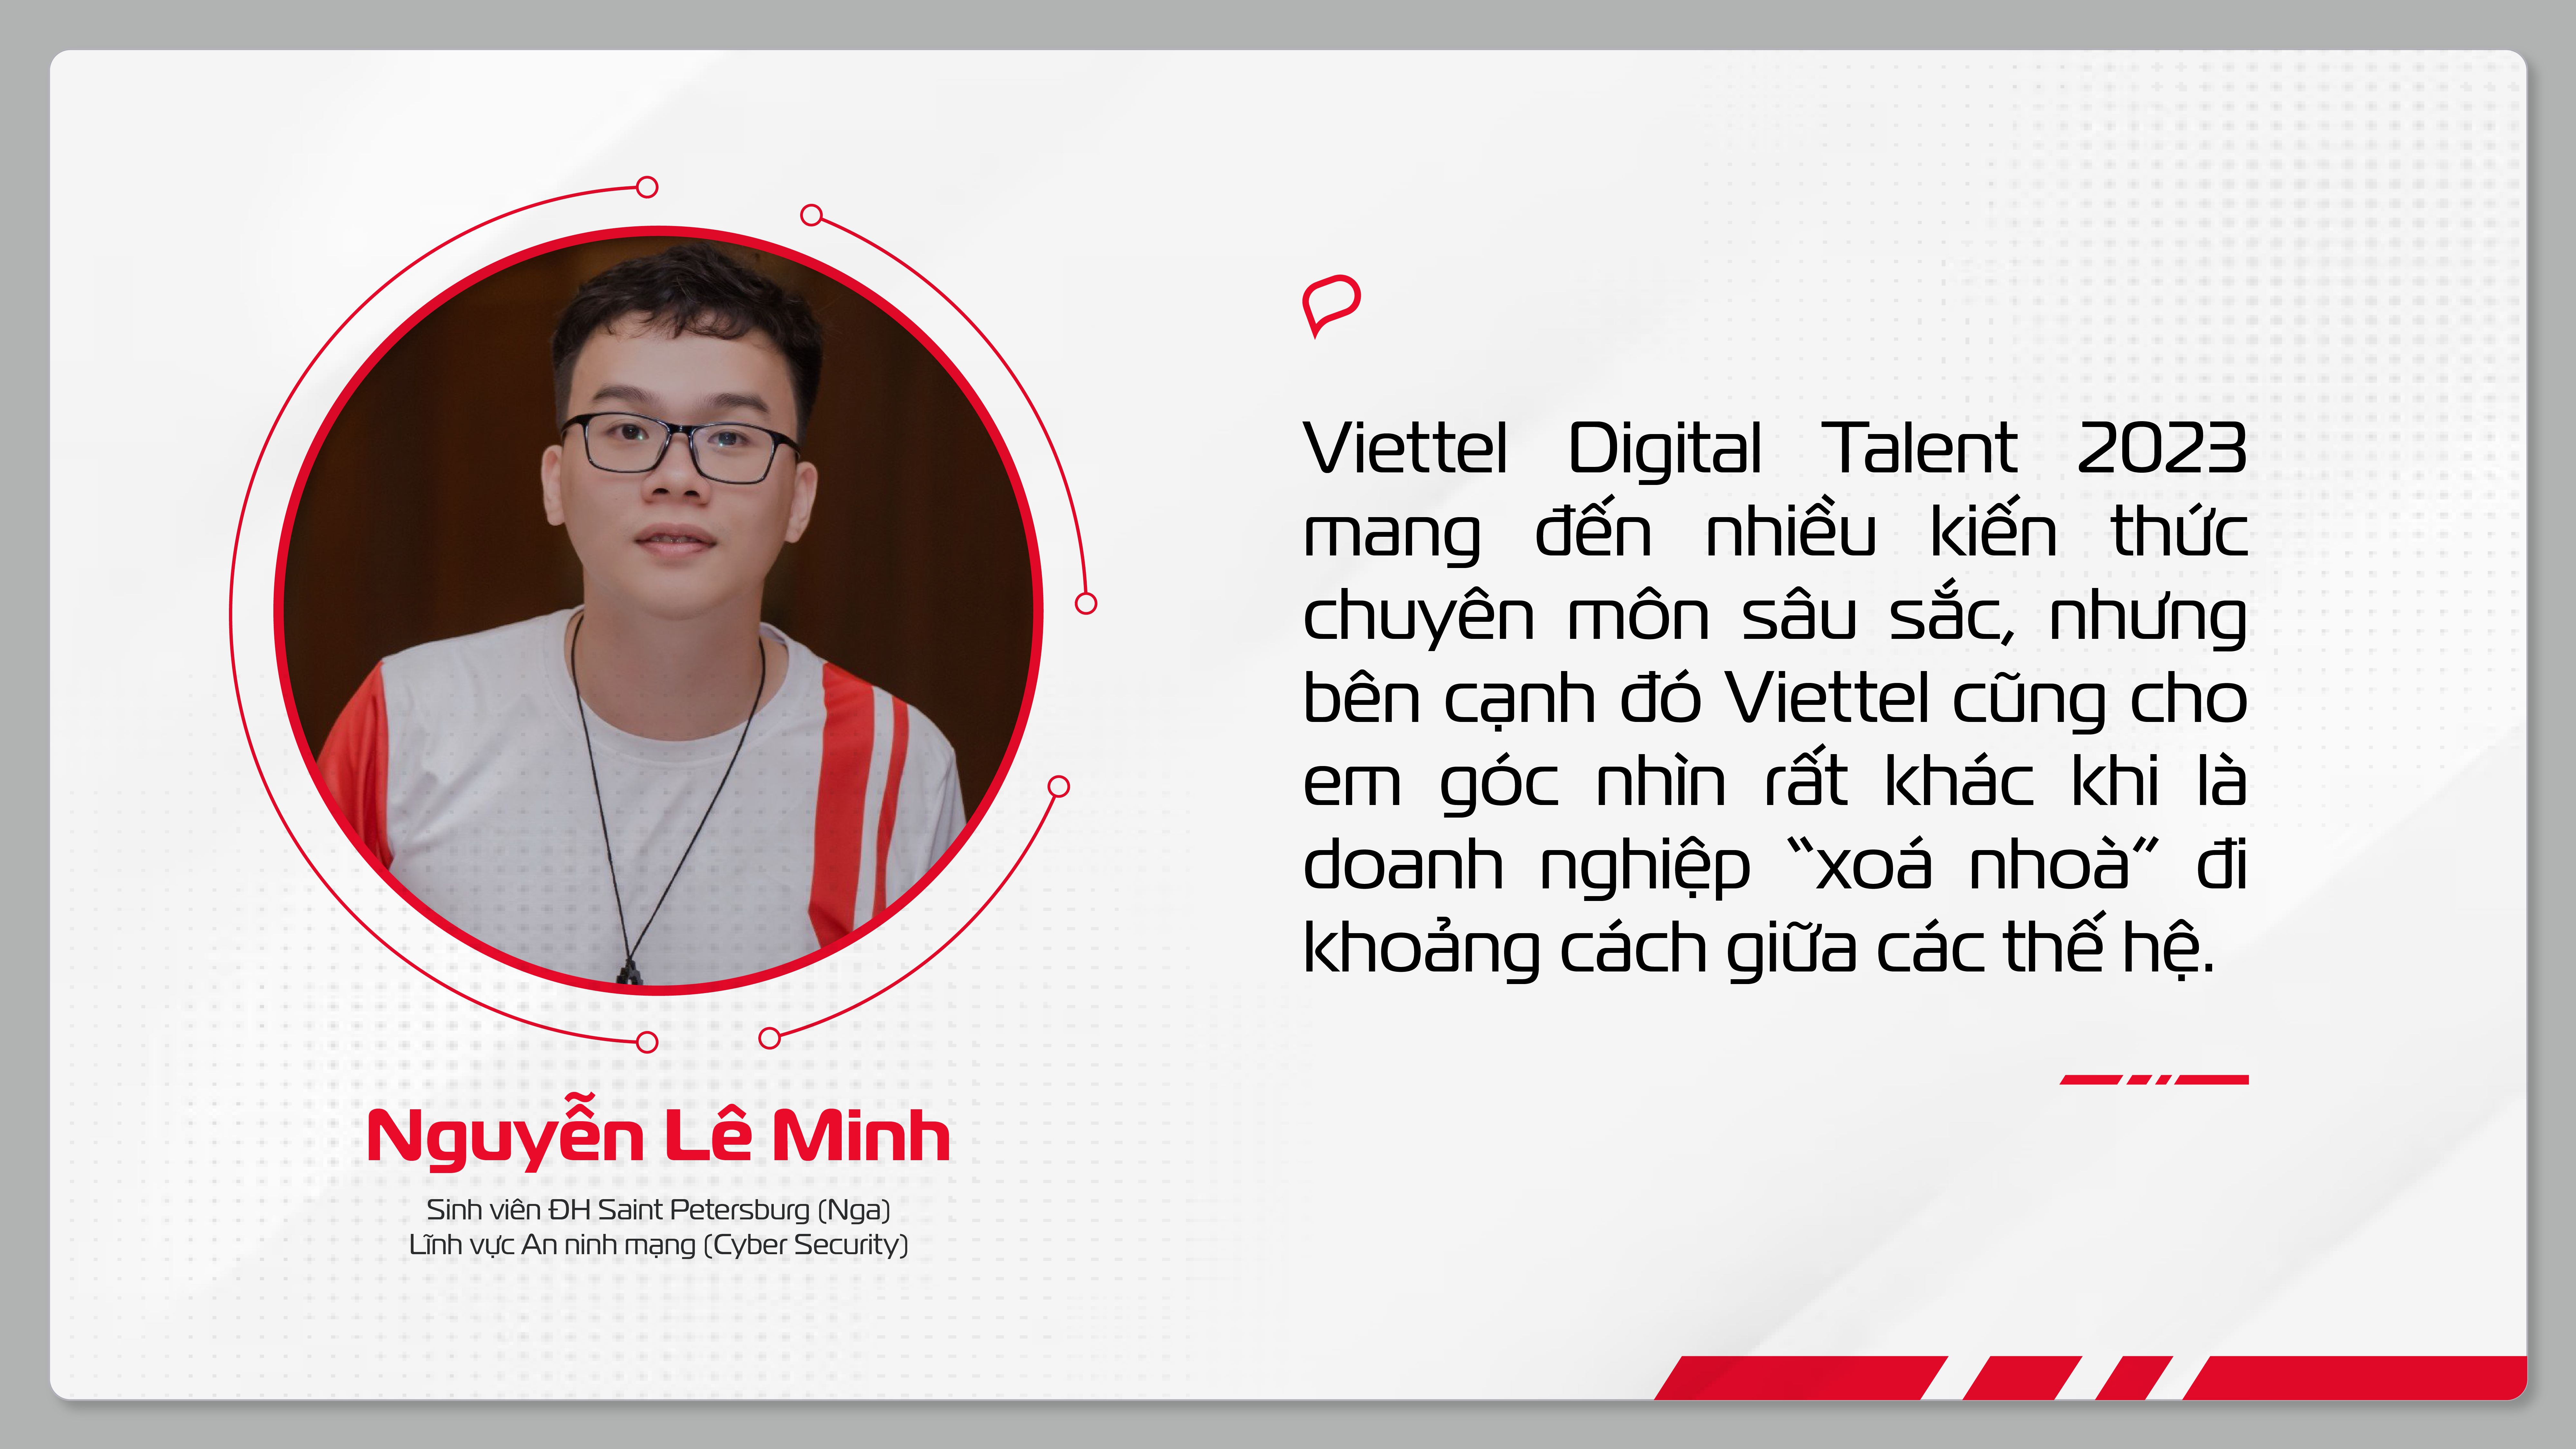 VDT - Nguyen Le Minh-01-1